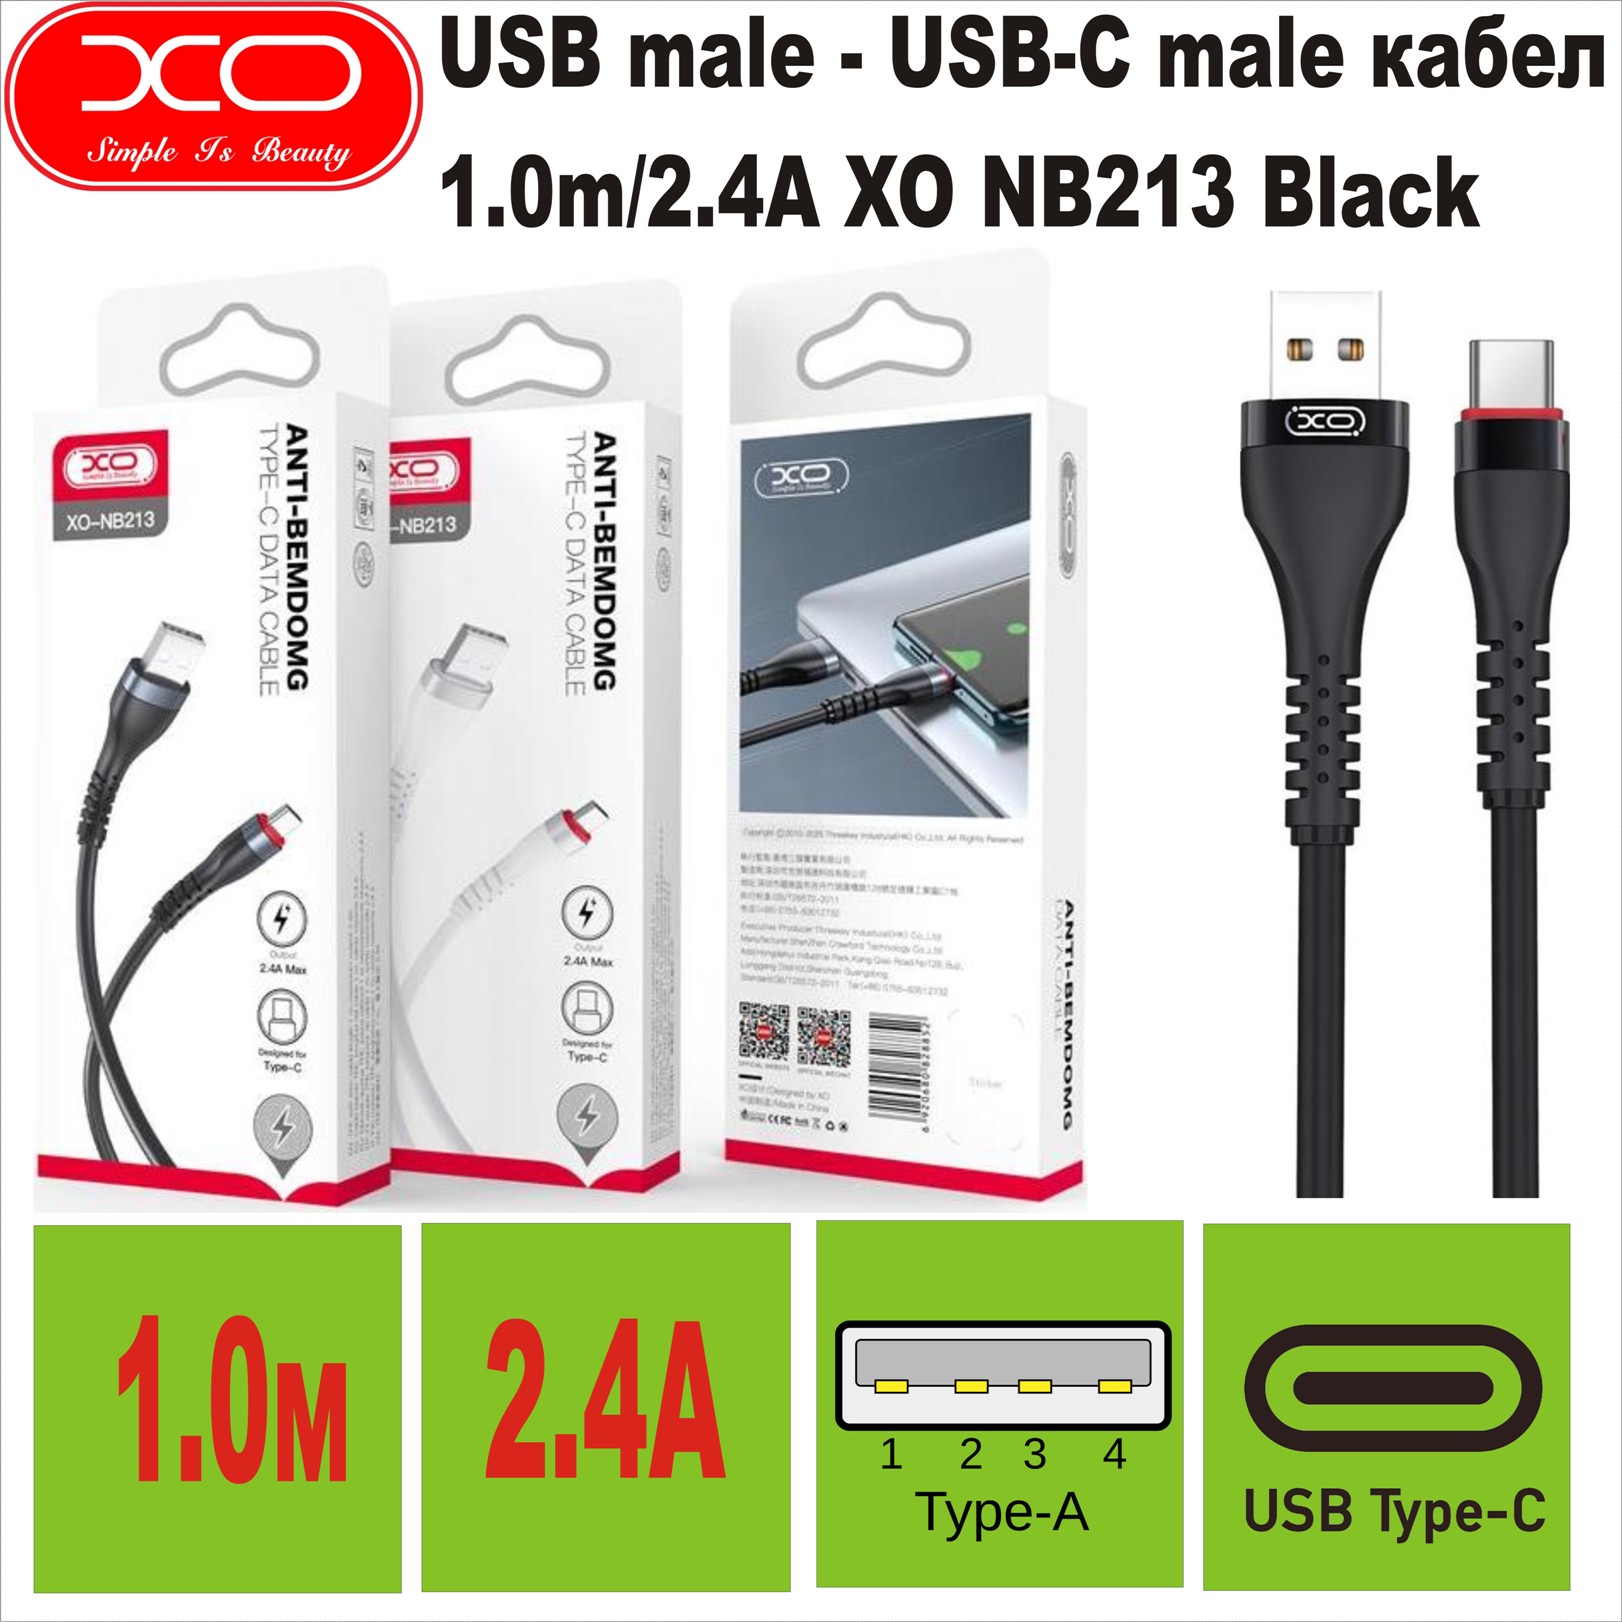 USB male - USB-C male 1.0m/2.4A XO NB213 Black